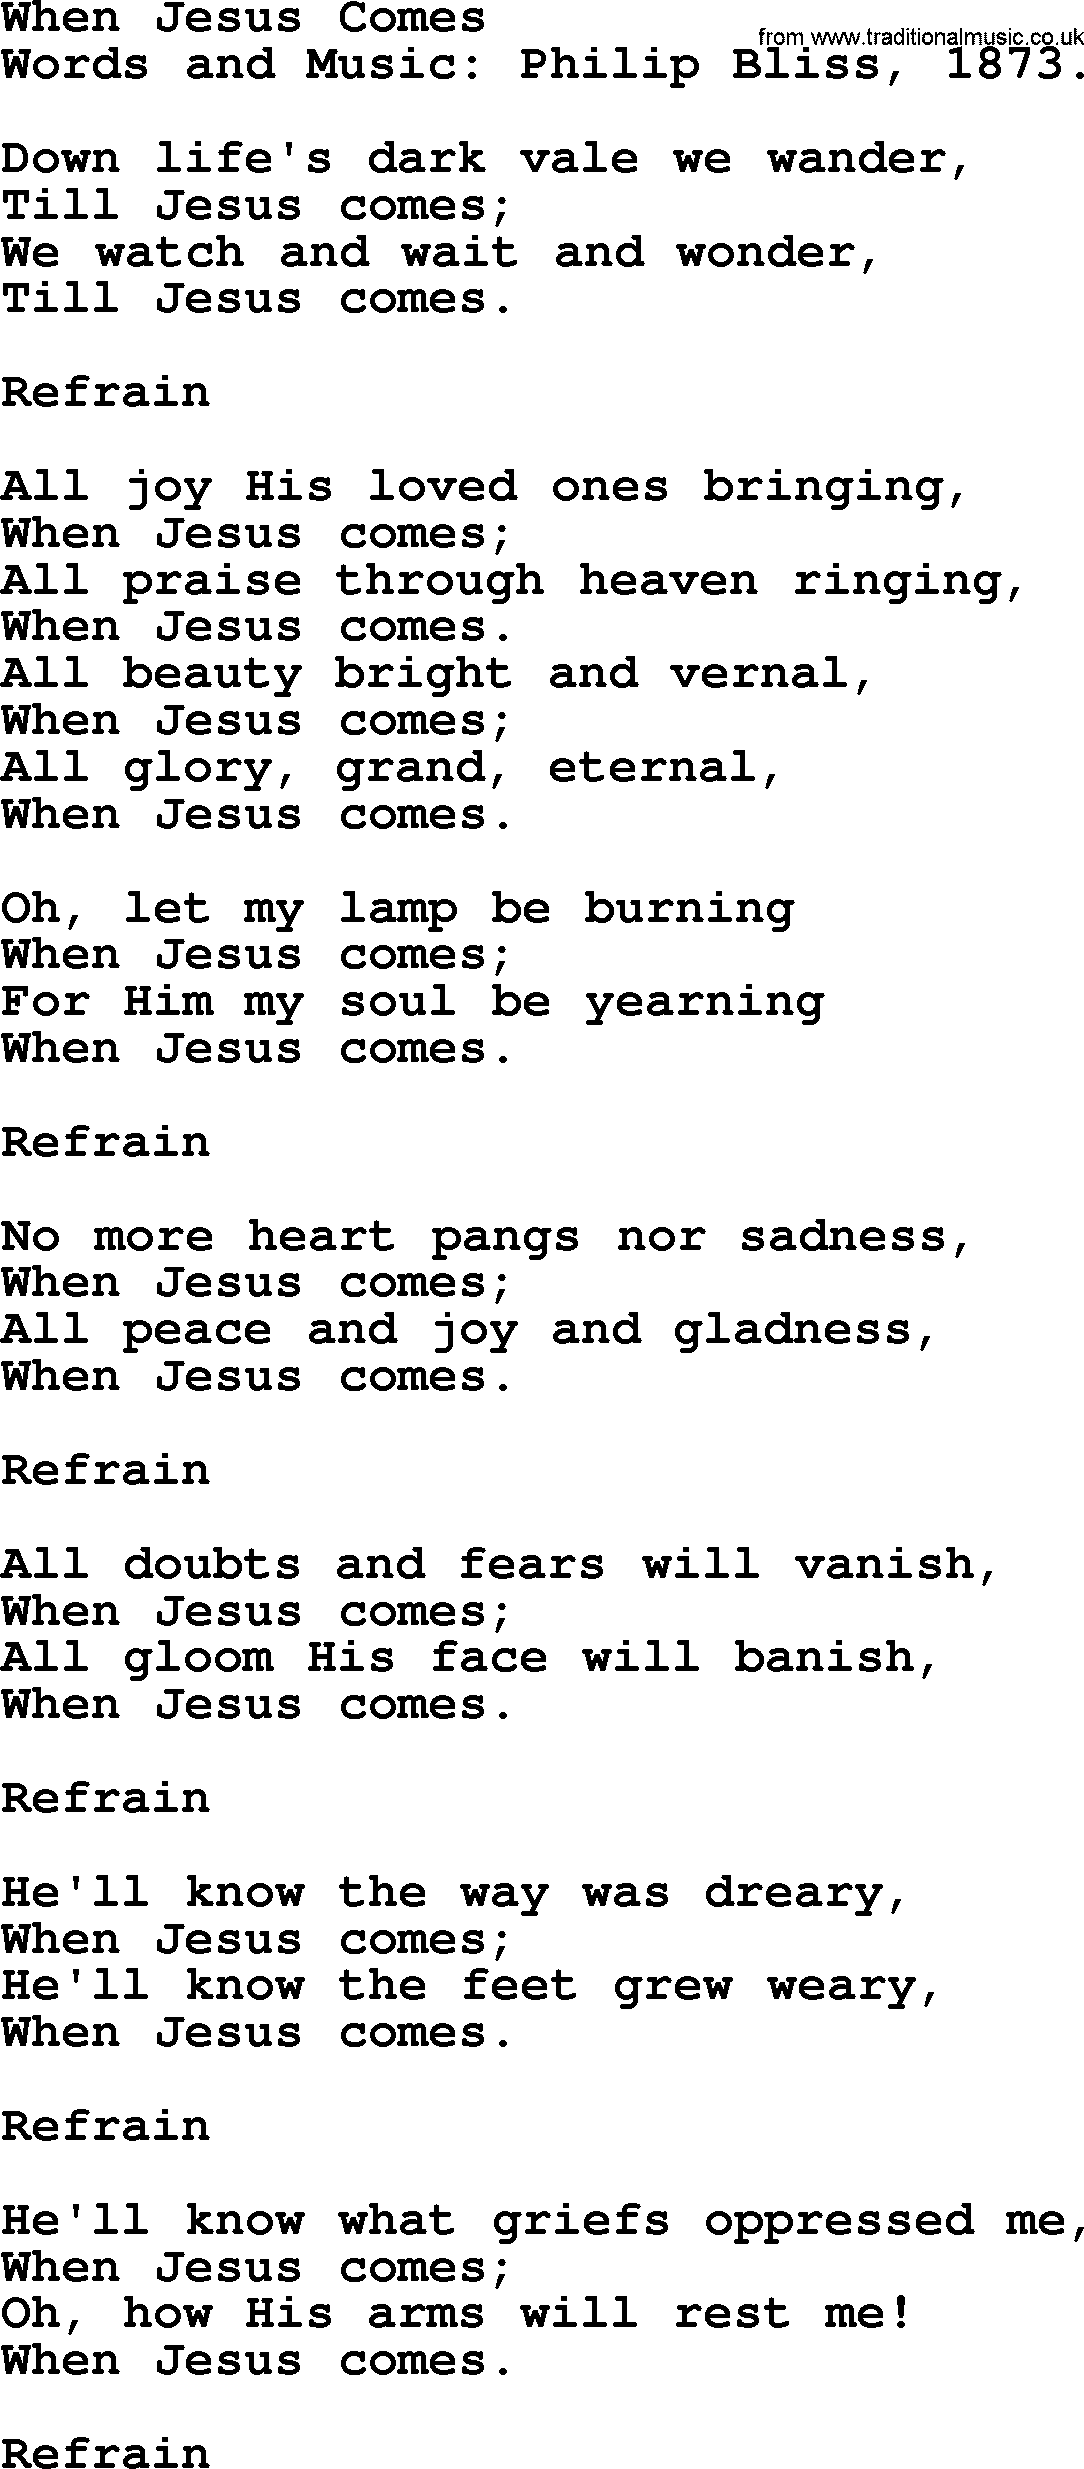 Philip Bliss Song: When Jesus Comes, lyrics